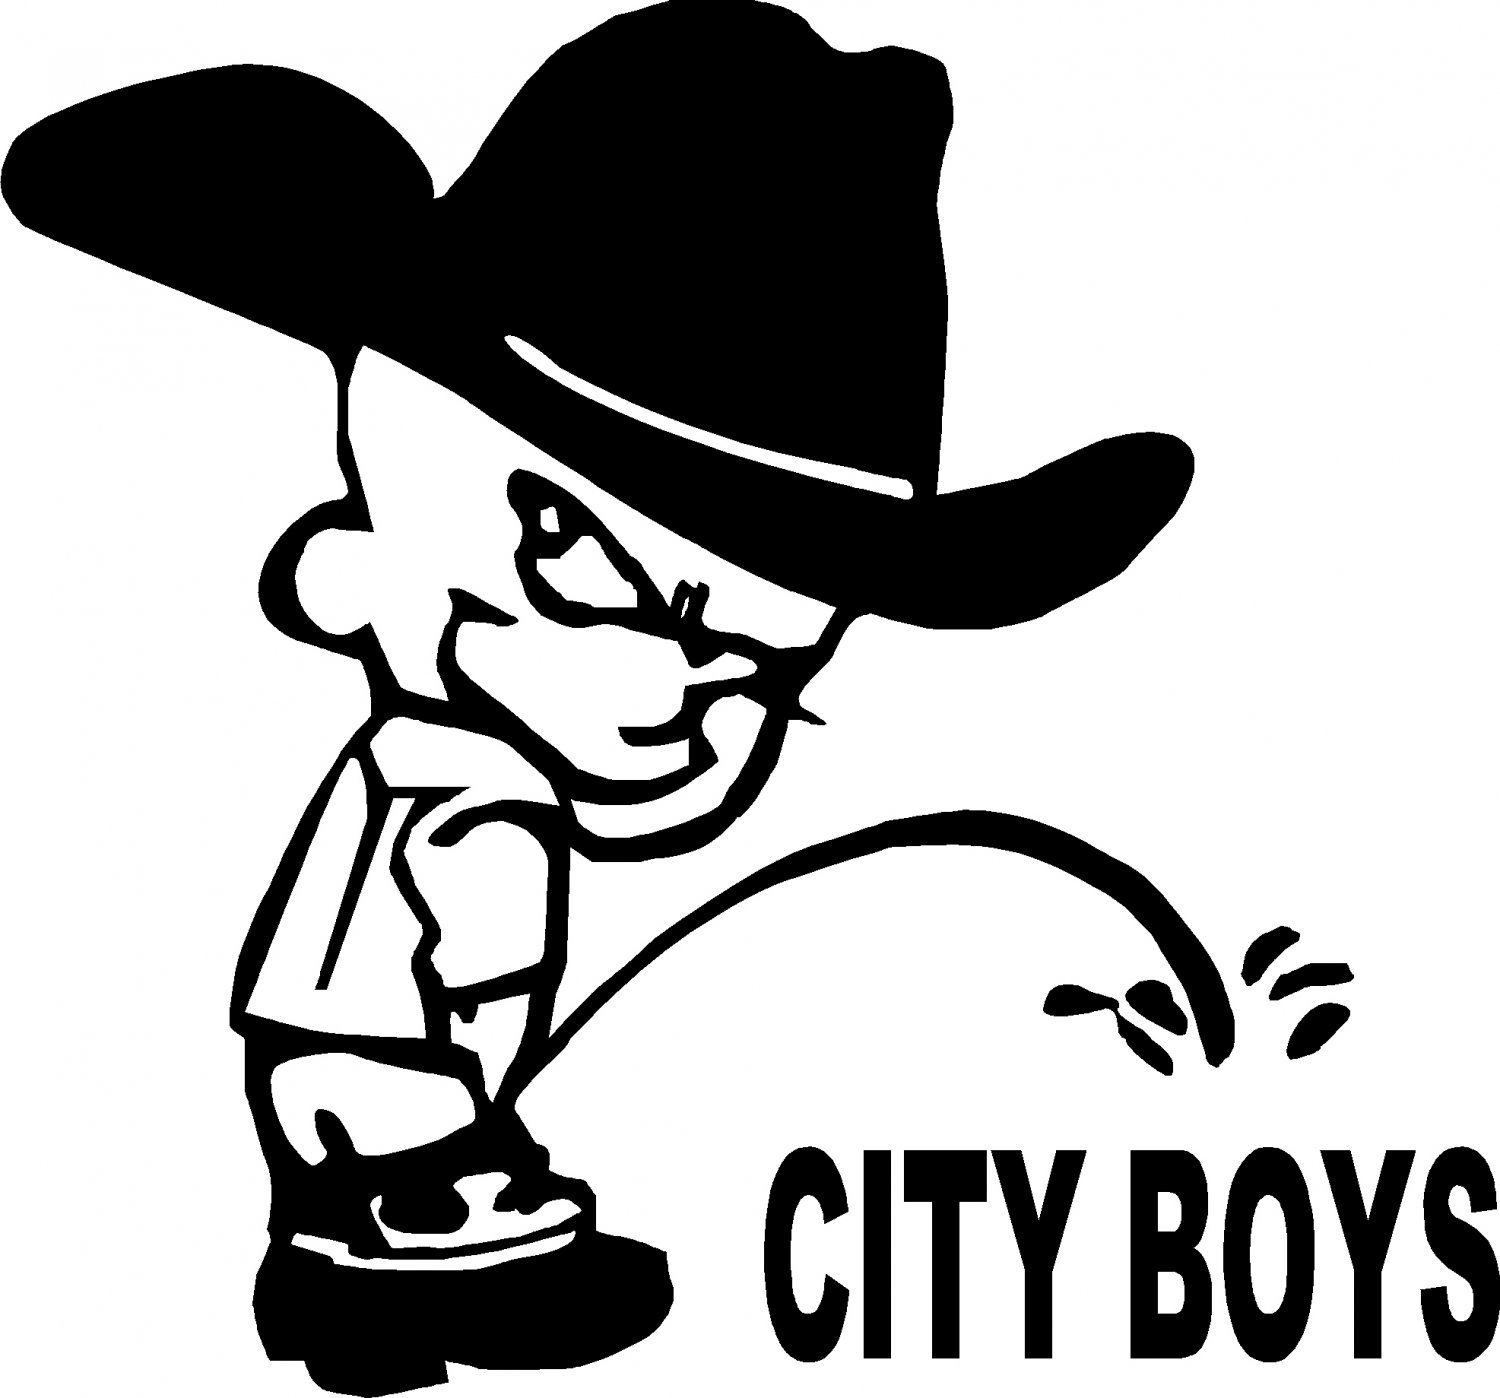 COUNTRY BOY PEE ON CITY BOYS 10+" wide! VINYL DECAL STICKER